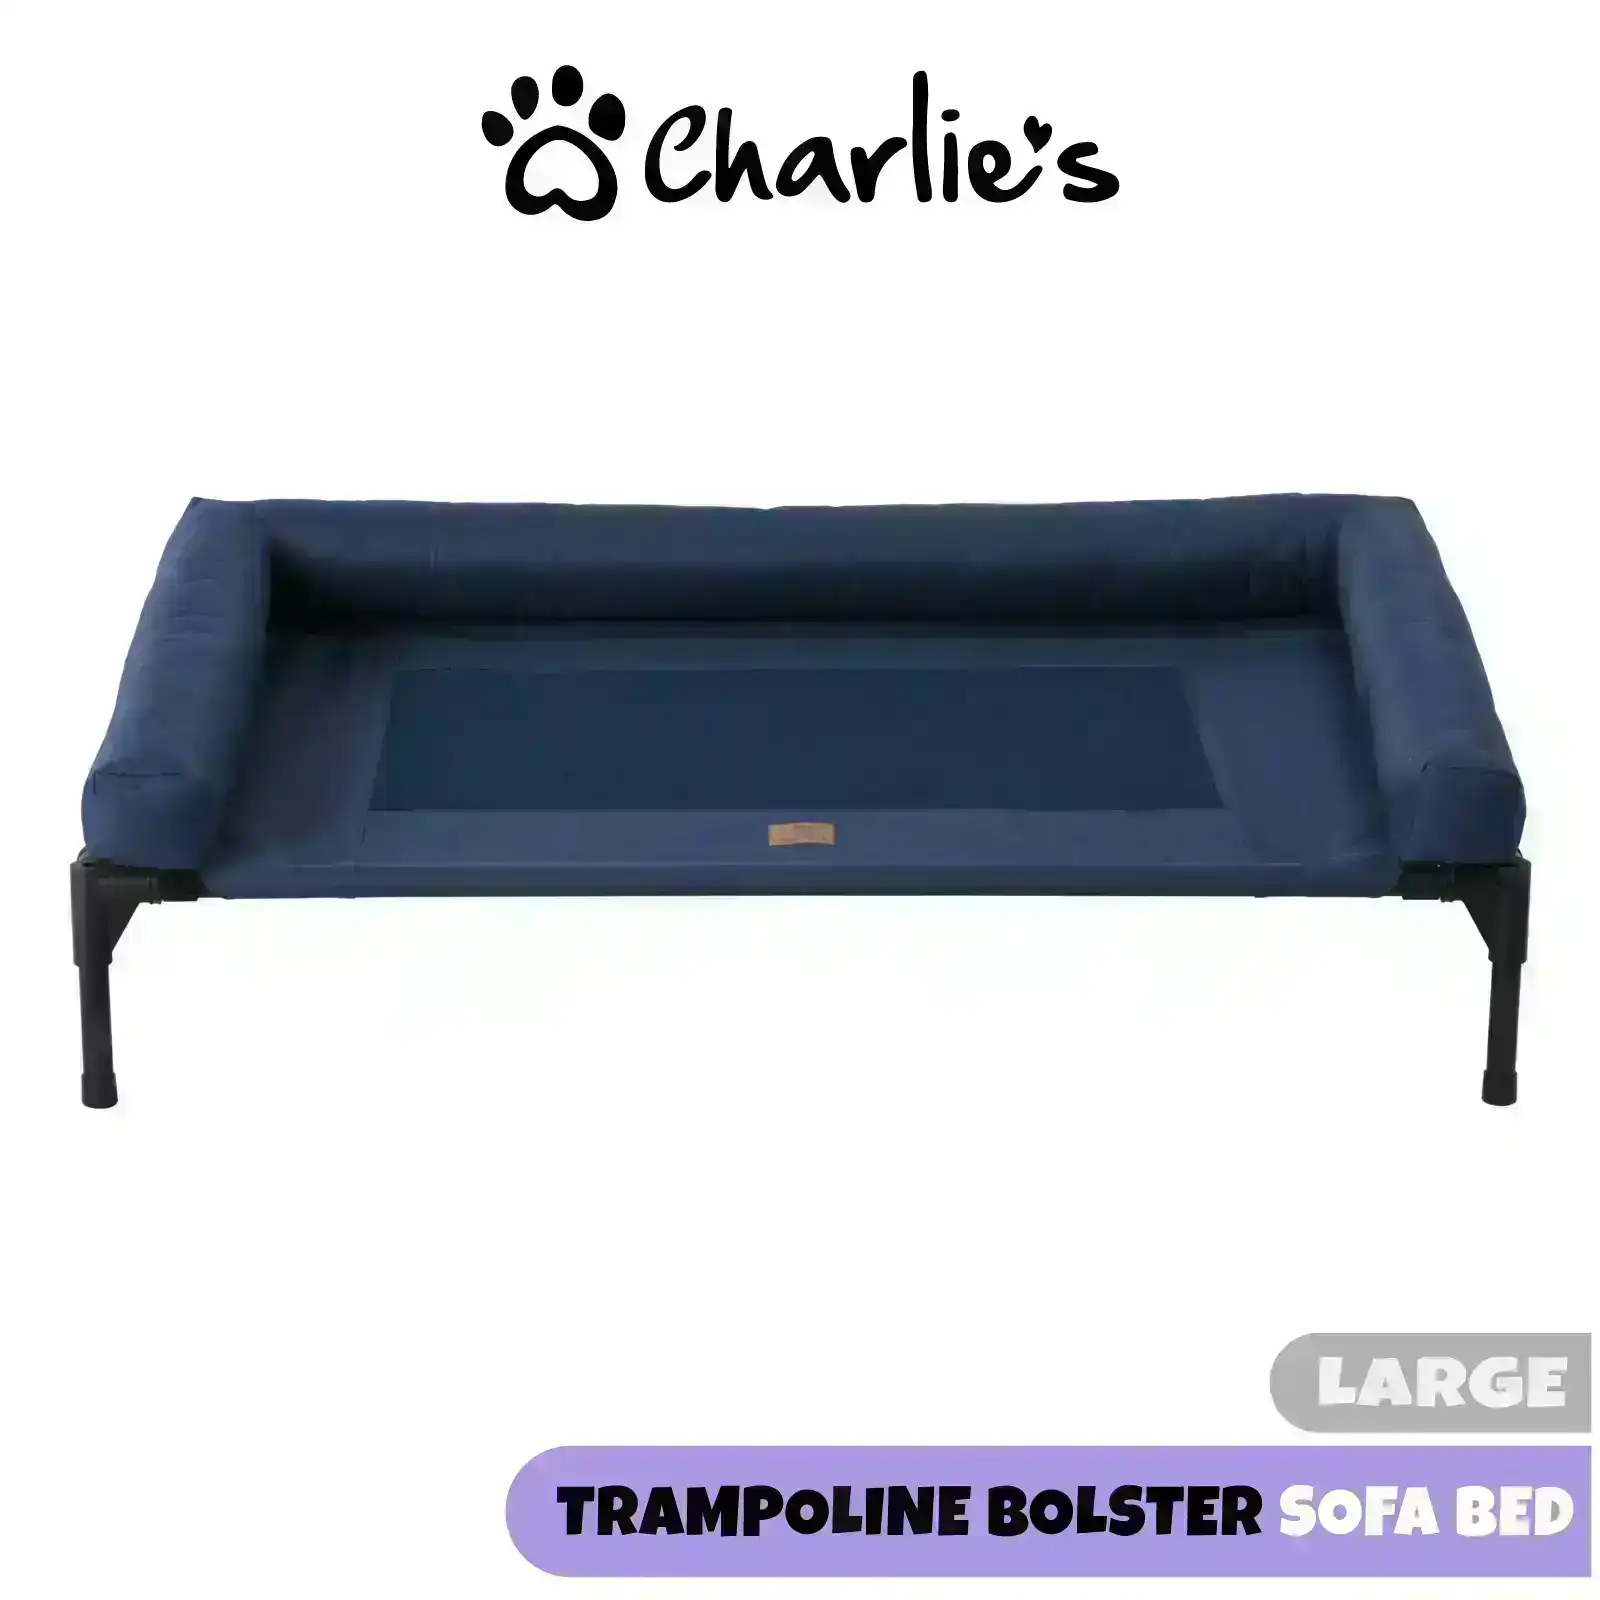 Charlie’s Pet Trampoline Bolster Sofa Bed Blue Large 108 x 76.2 x 26.7cm